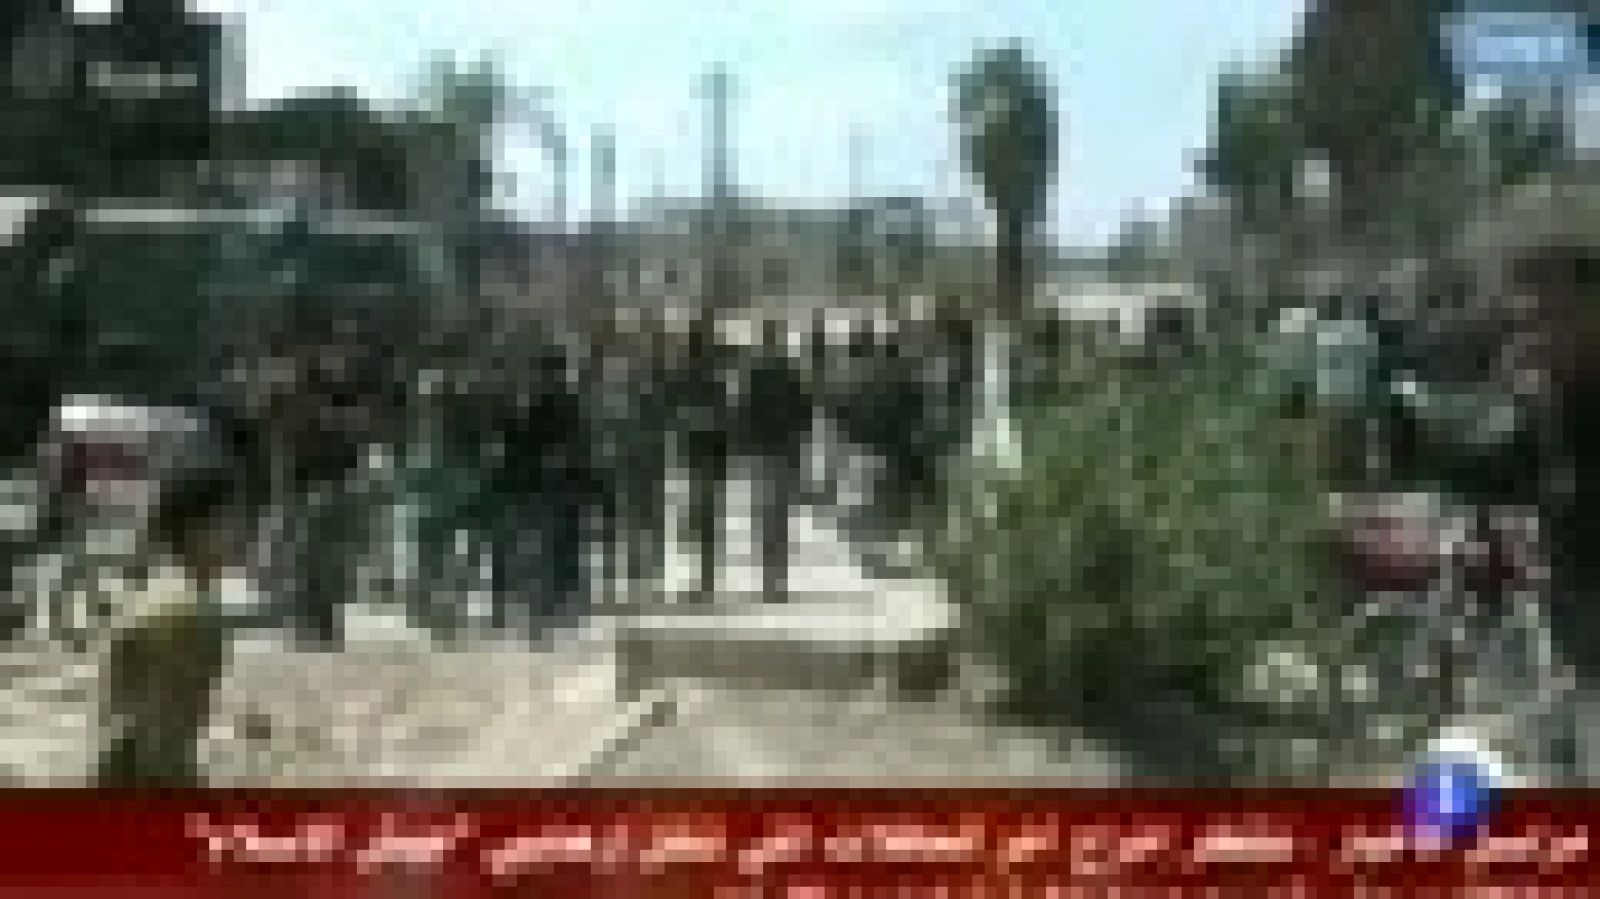 Telediario 1: Miembros de la minoría cristiana residente en Damasco dicen que estos ataques no arreglan nada | RTVE Play